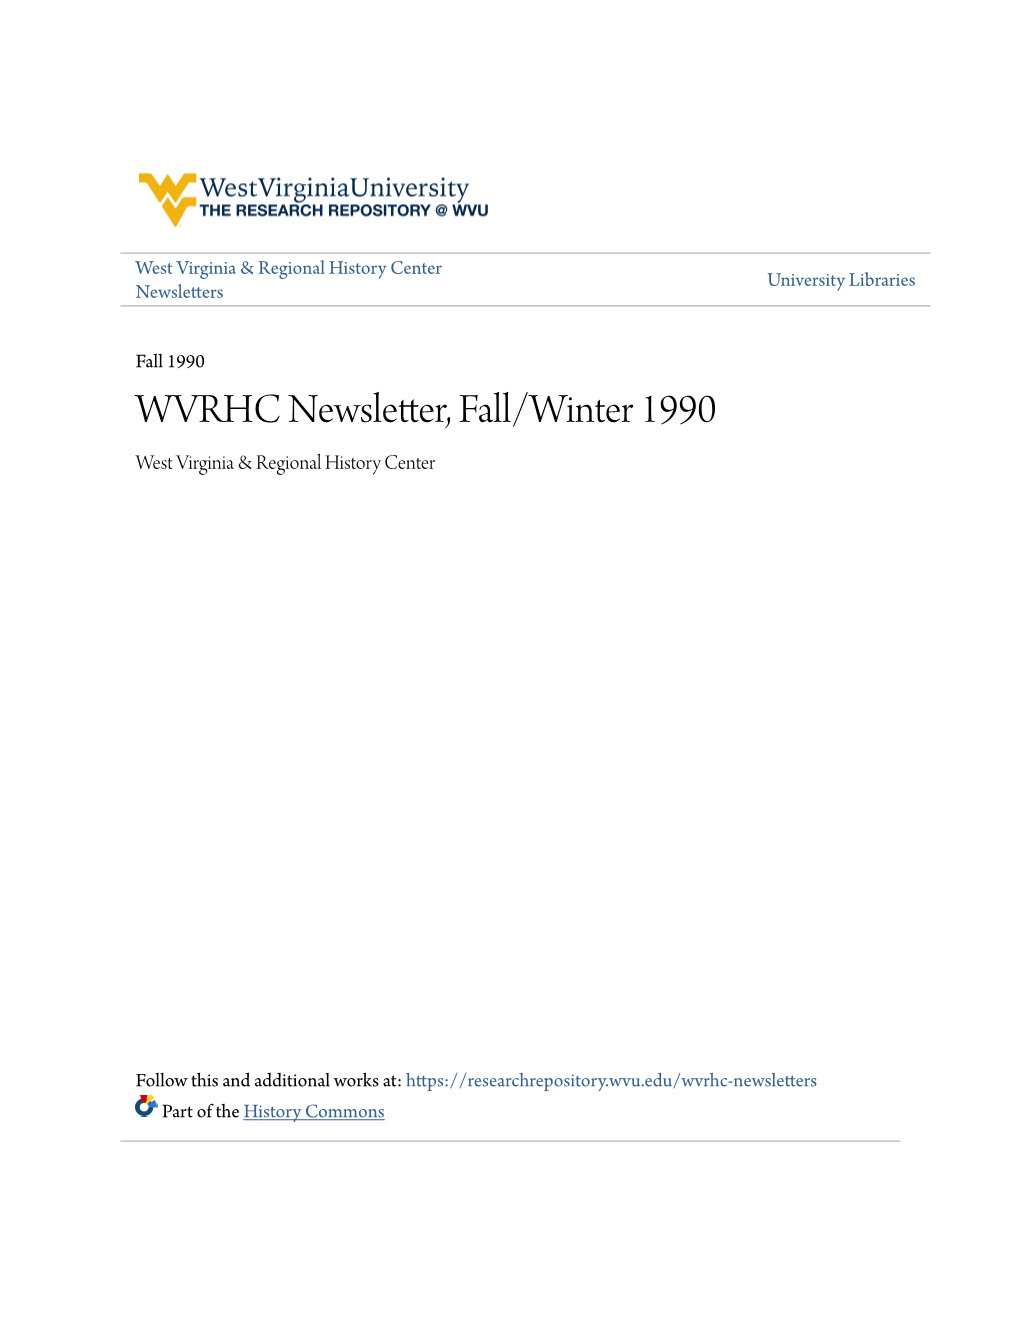 WVRHC Newsletter, Fall/Winter 1990 West Virginia & Regional History Center